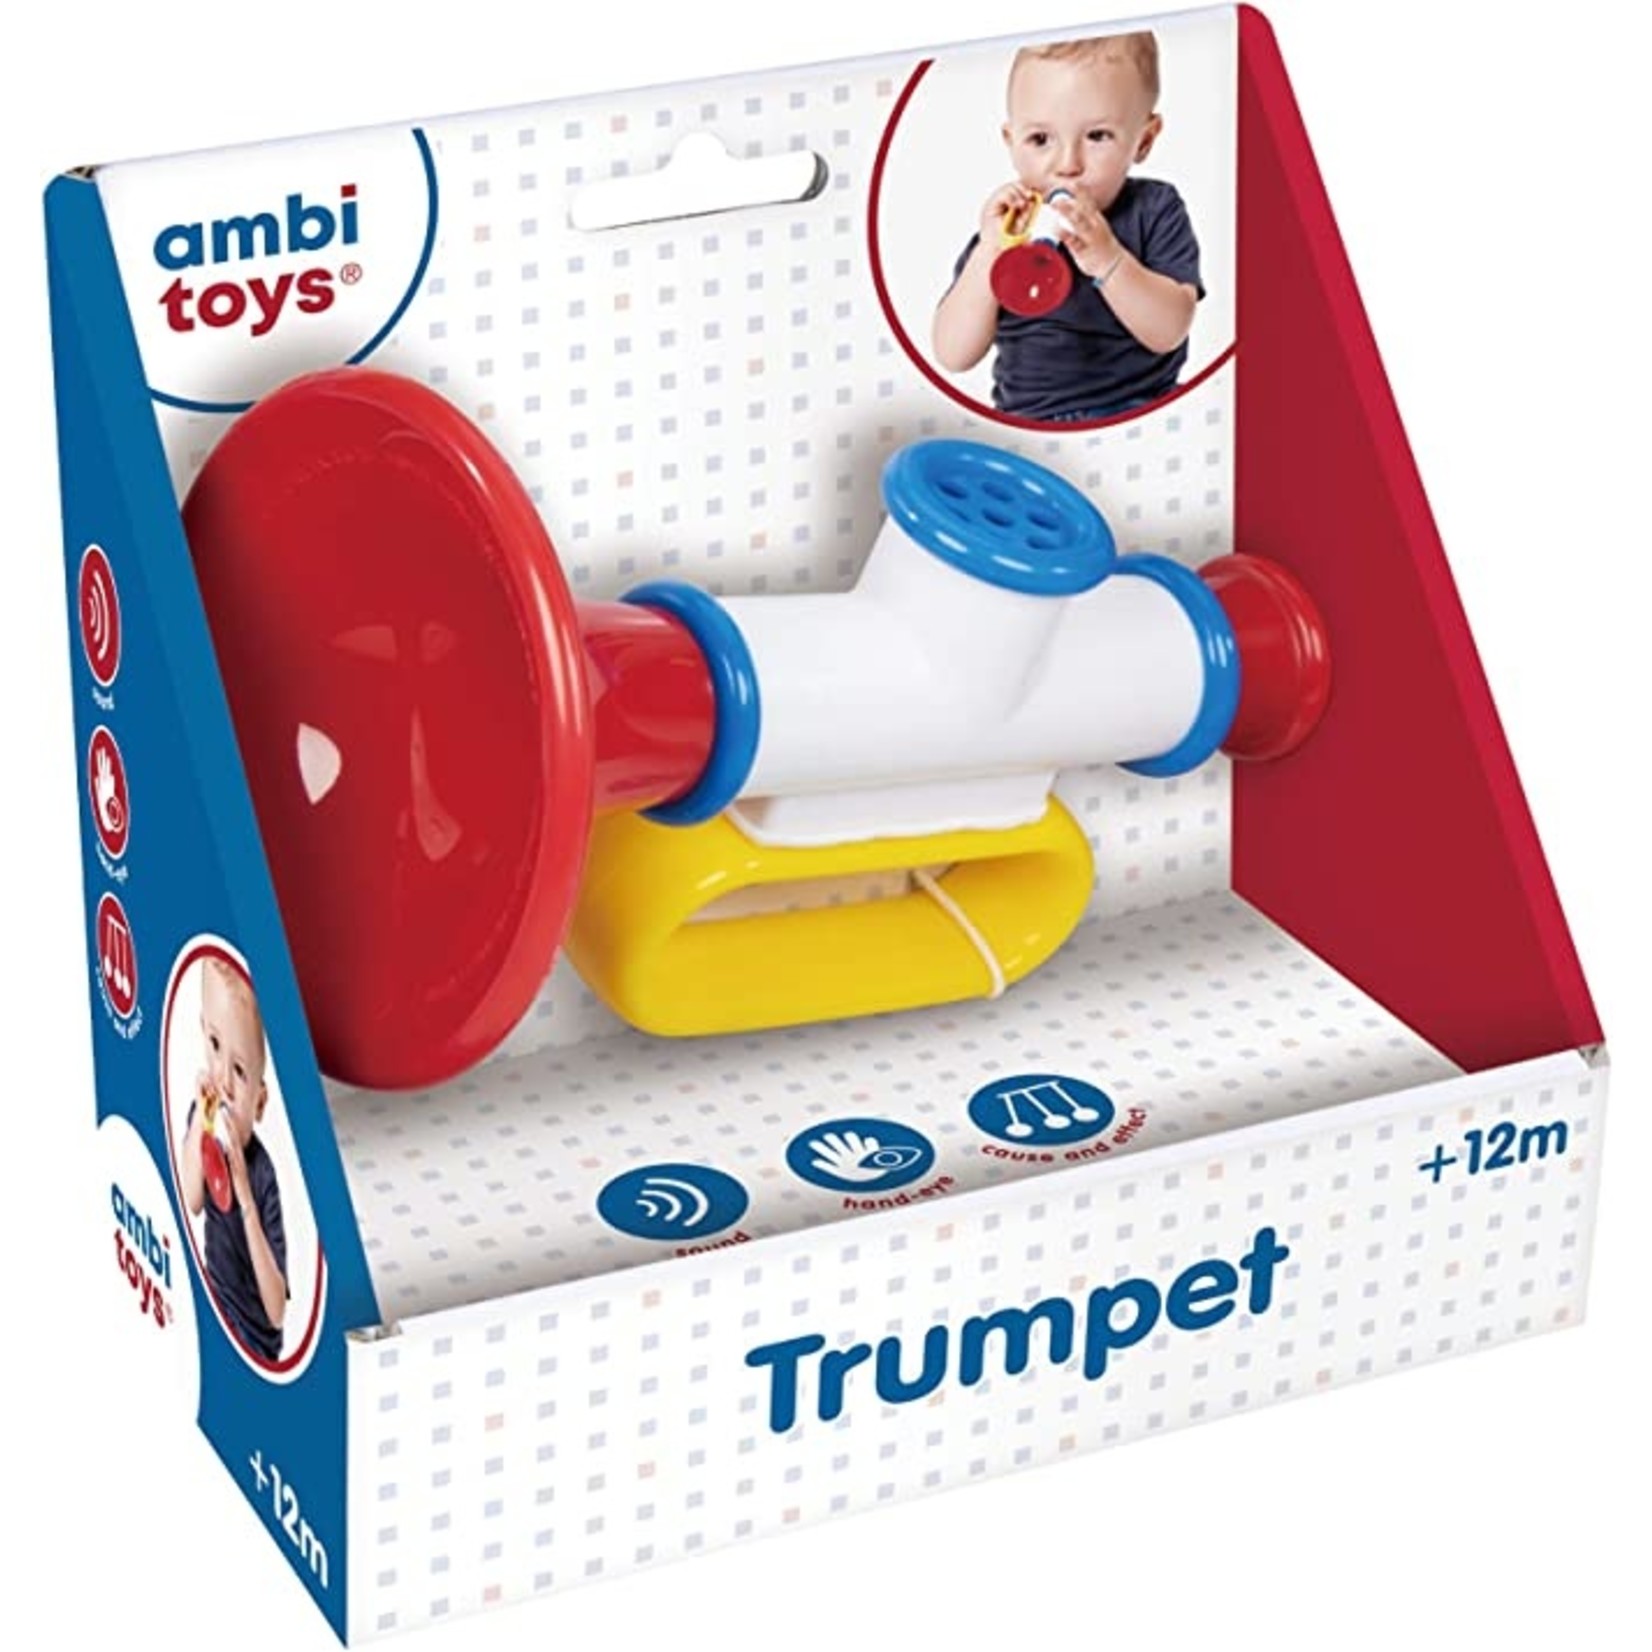 Ambi Toys Trumpet